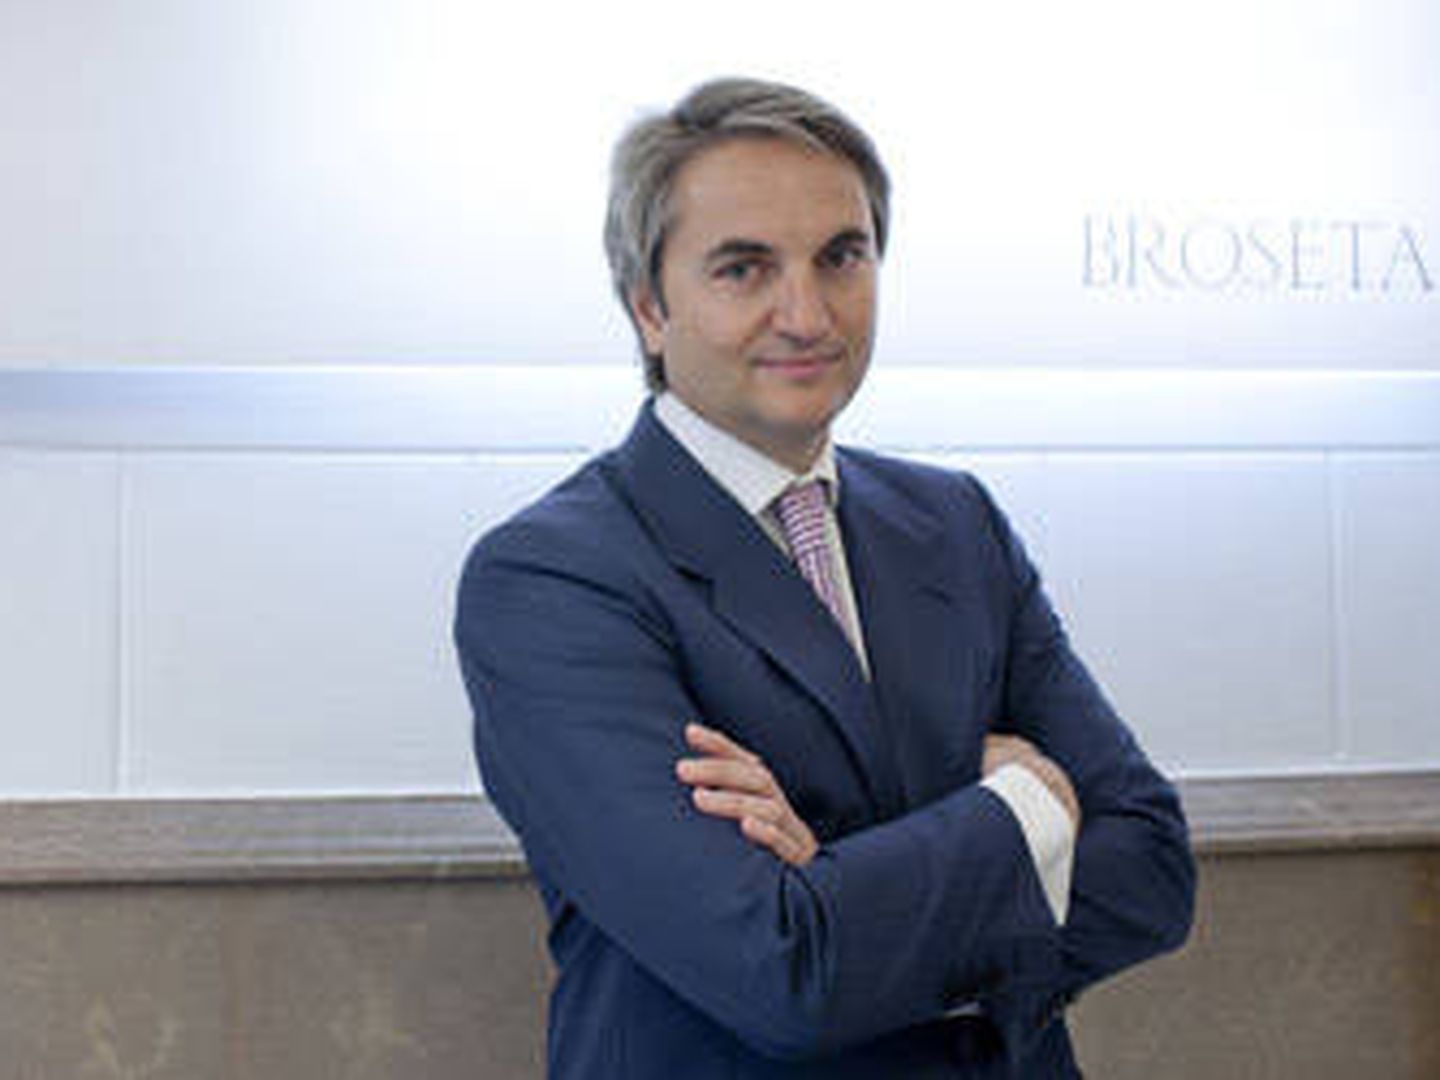 El abogado Manuel Broseta Dupré. (UV)